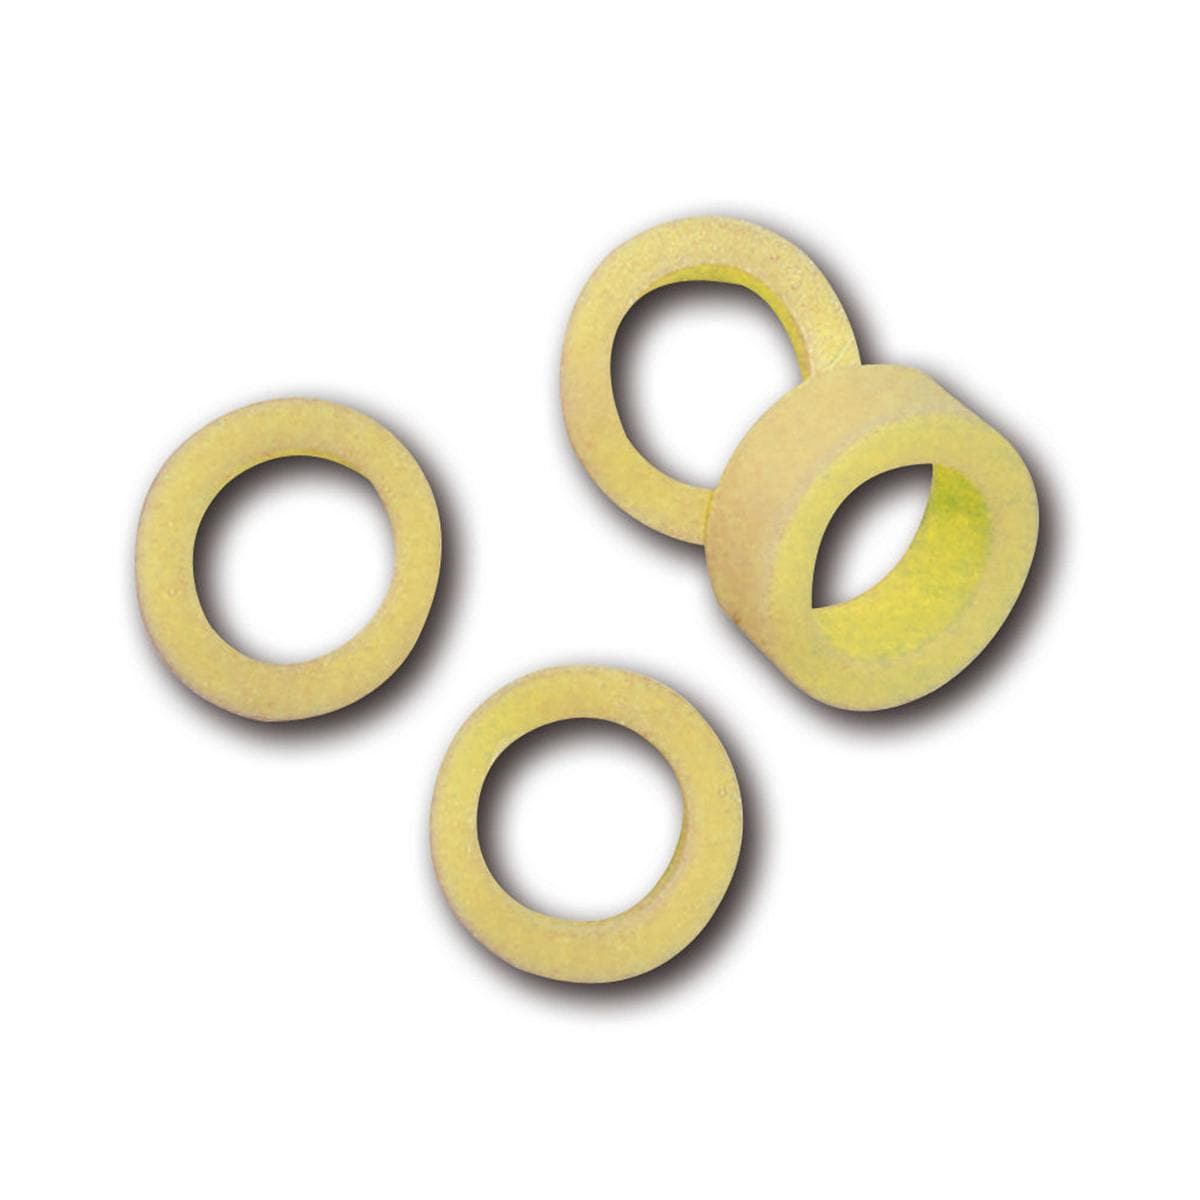 Maxi ID-Ringe - Gelb, Packung 25 Stück